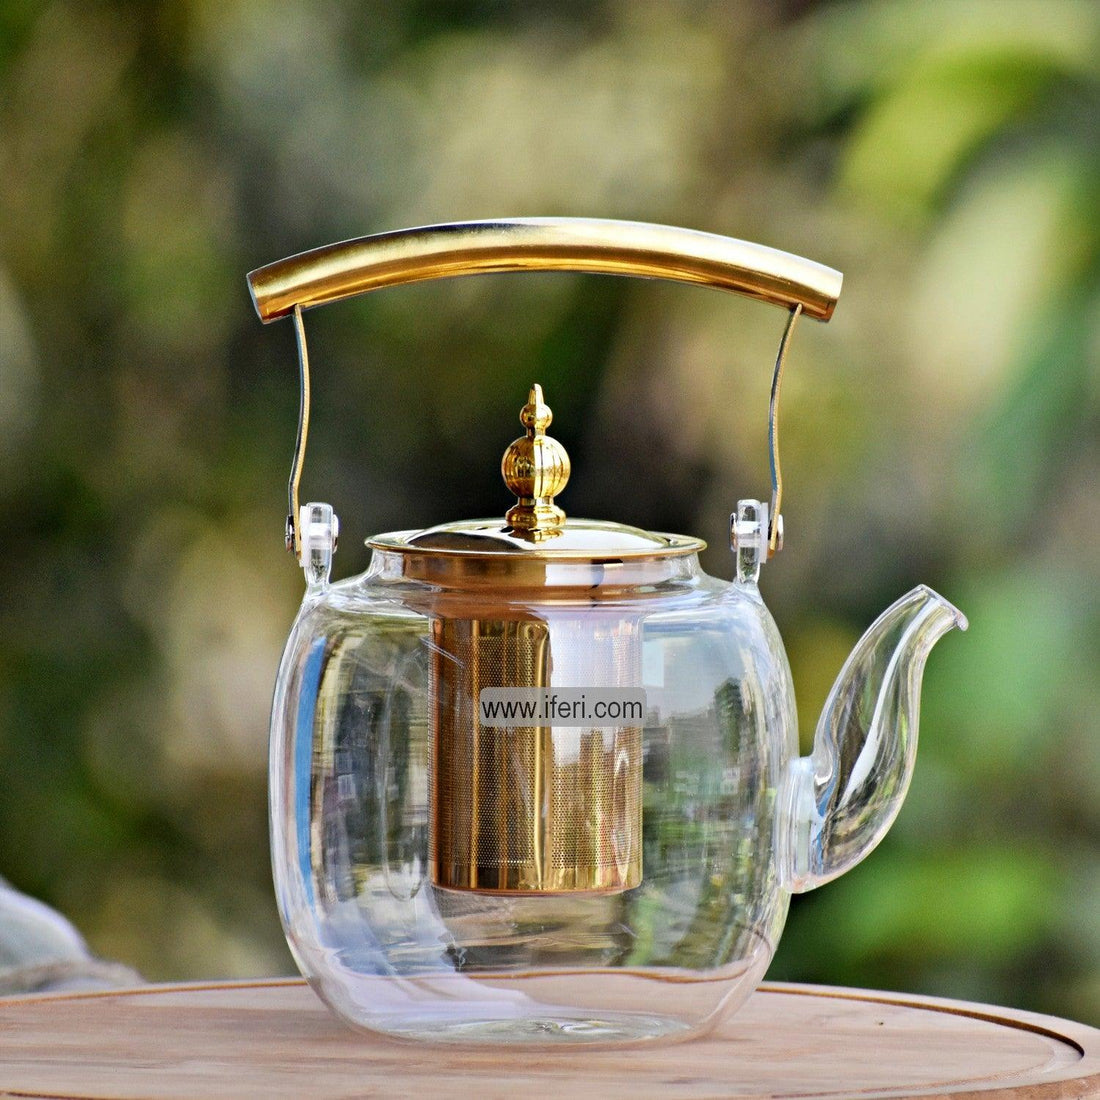 1000ml Tempered Glass Tea Pot with Infuser RY0139 Price in Bangladesh - iferi.com